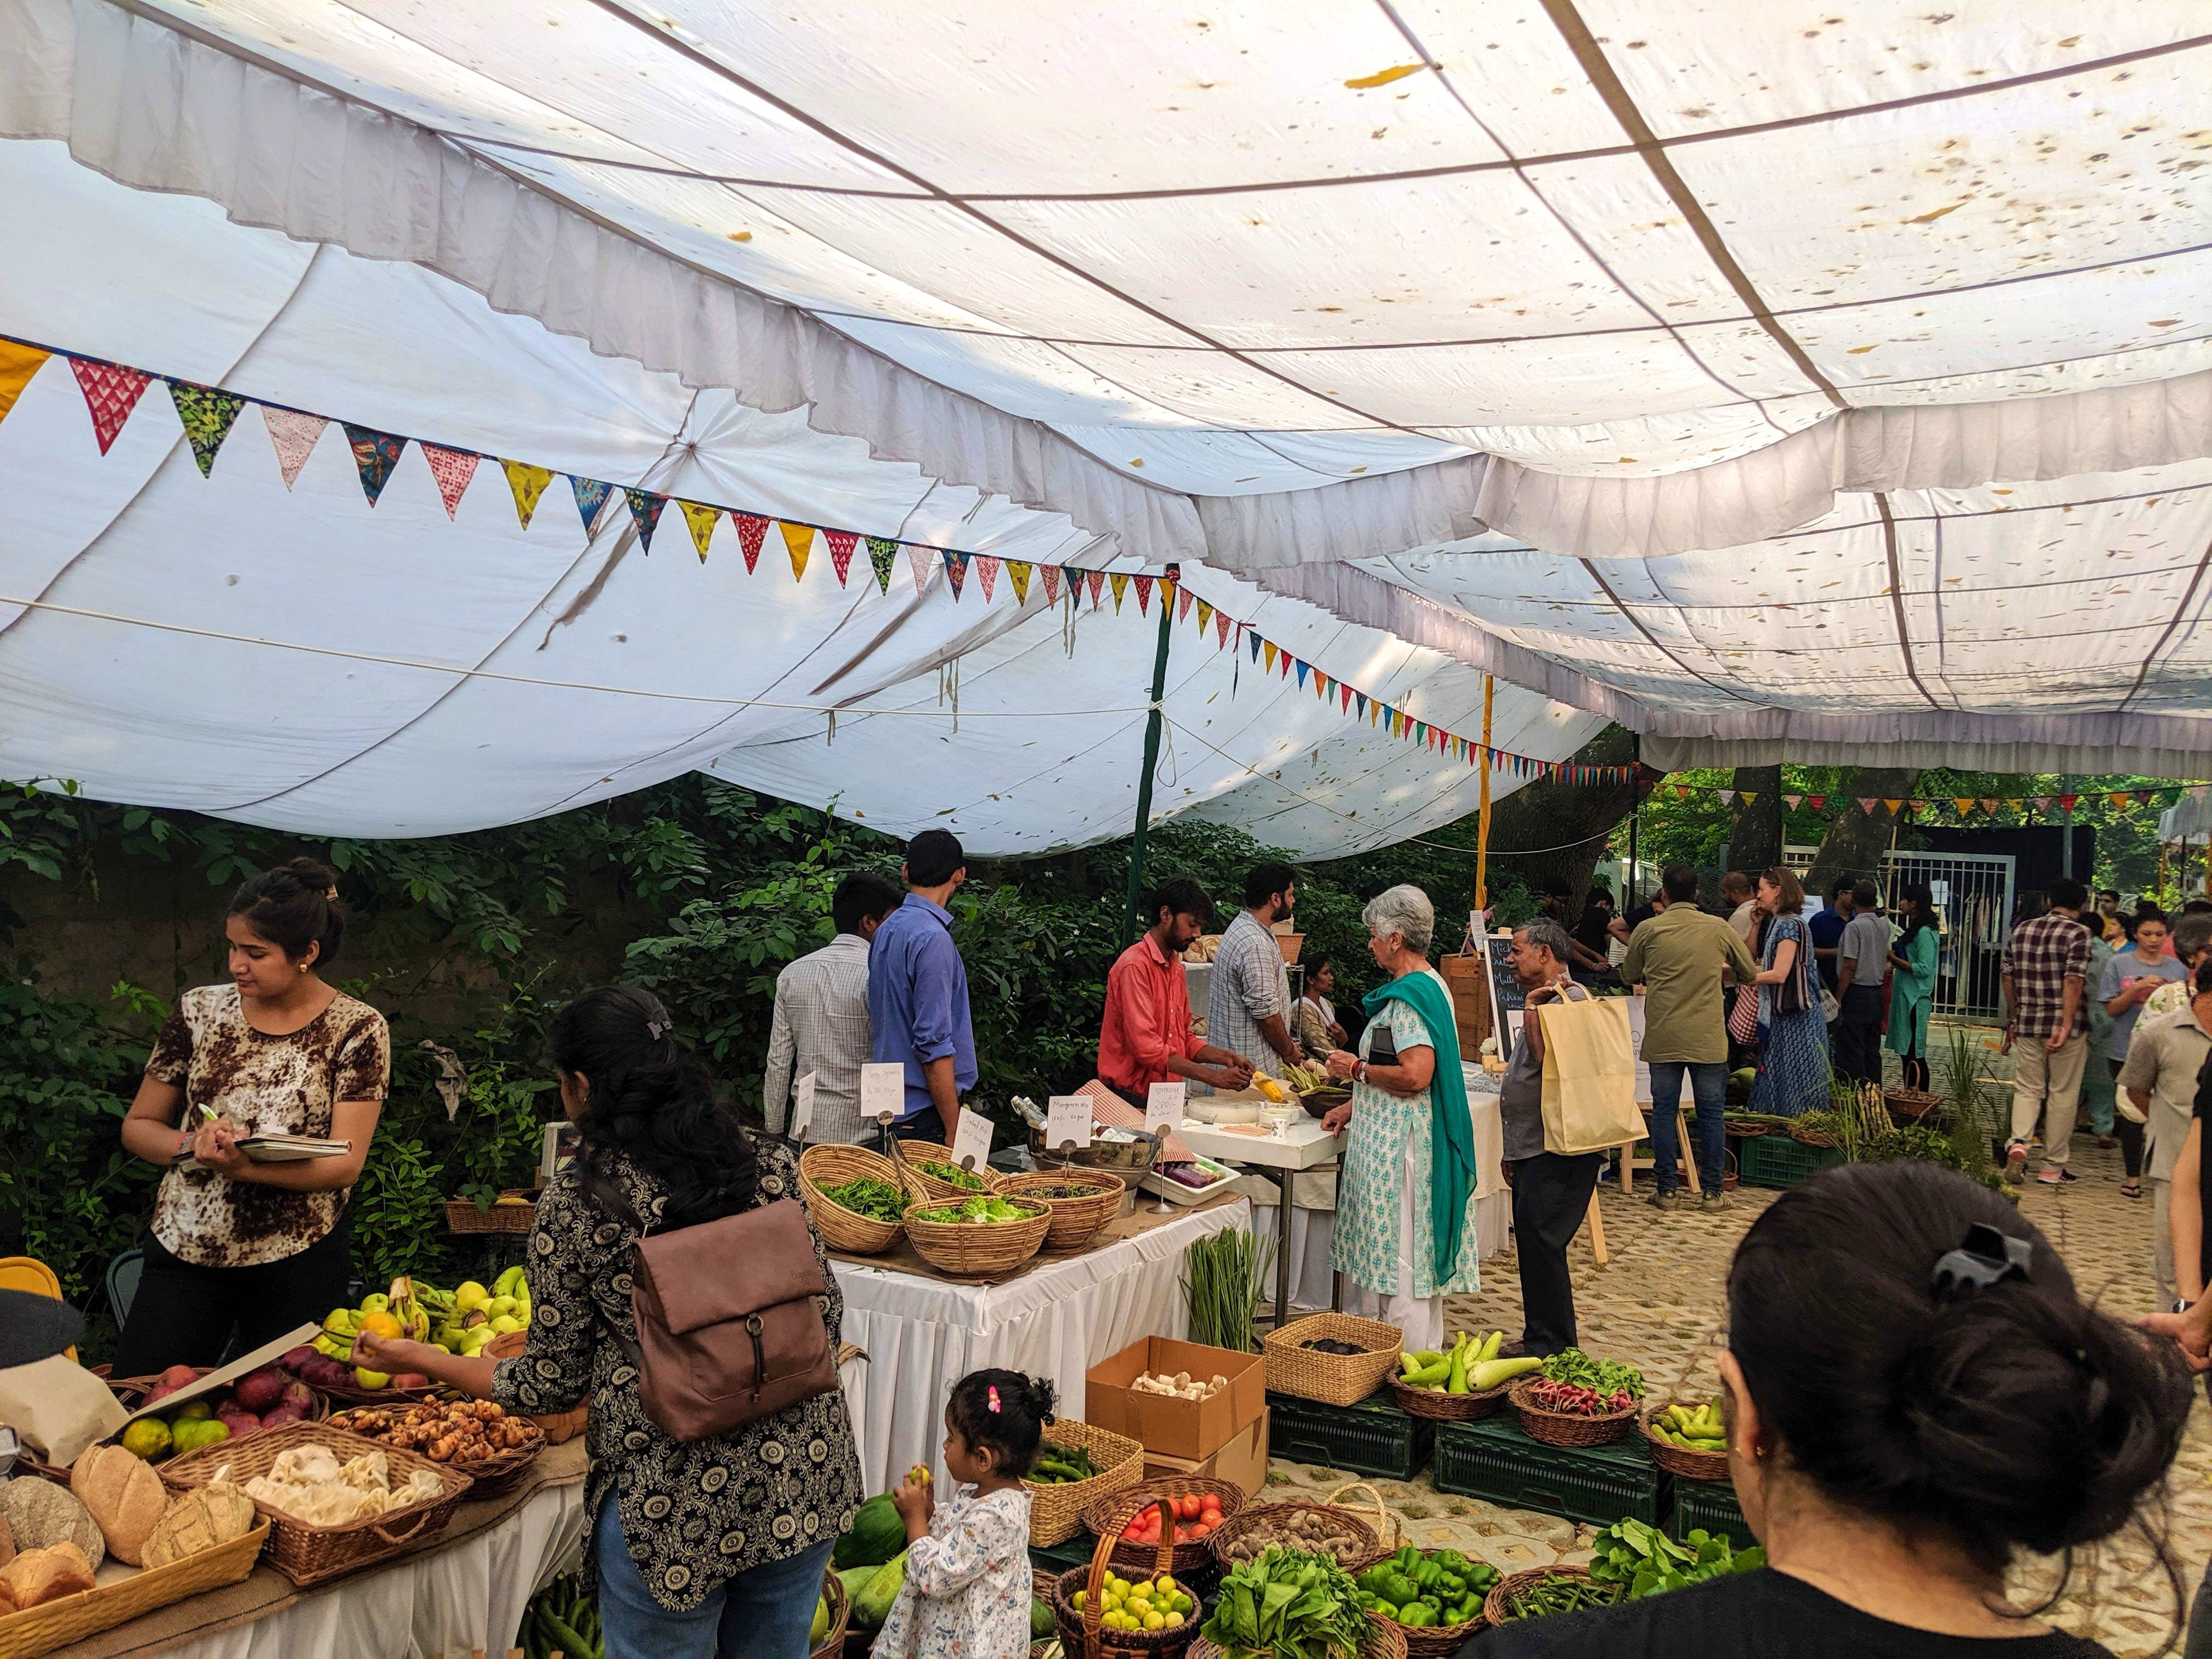 Marketplace,Local food,Market,Public space,Community,Selling,Event,Bazaar,City,Plant